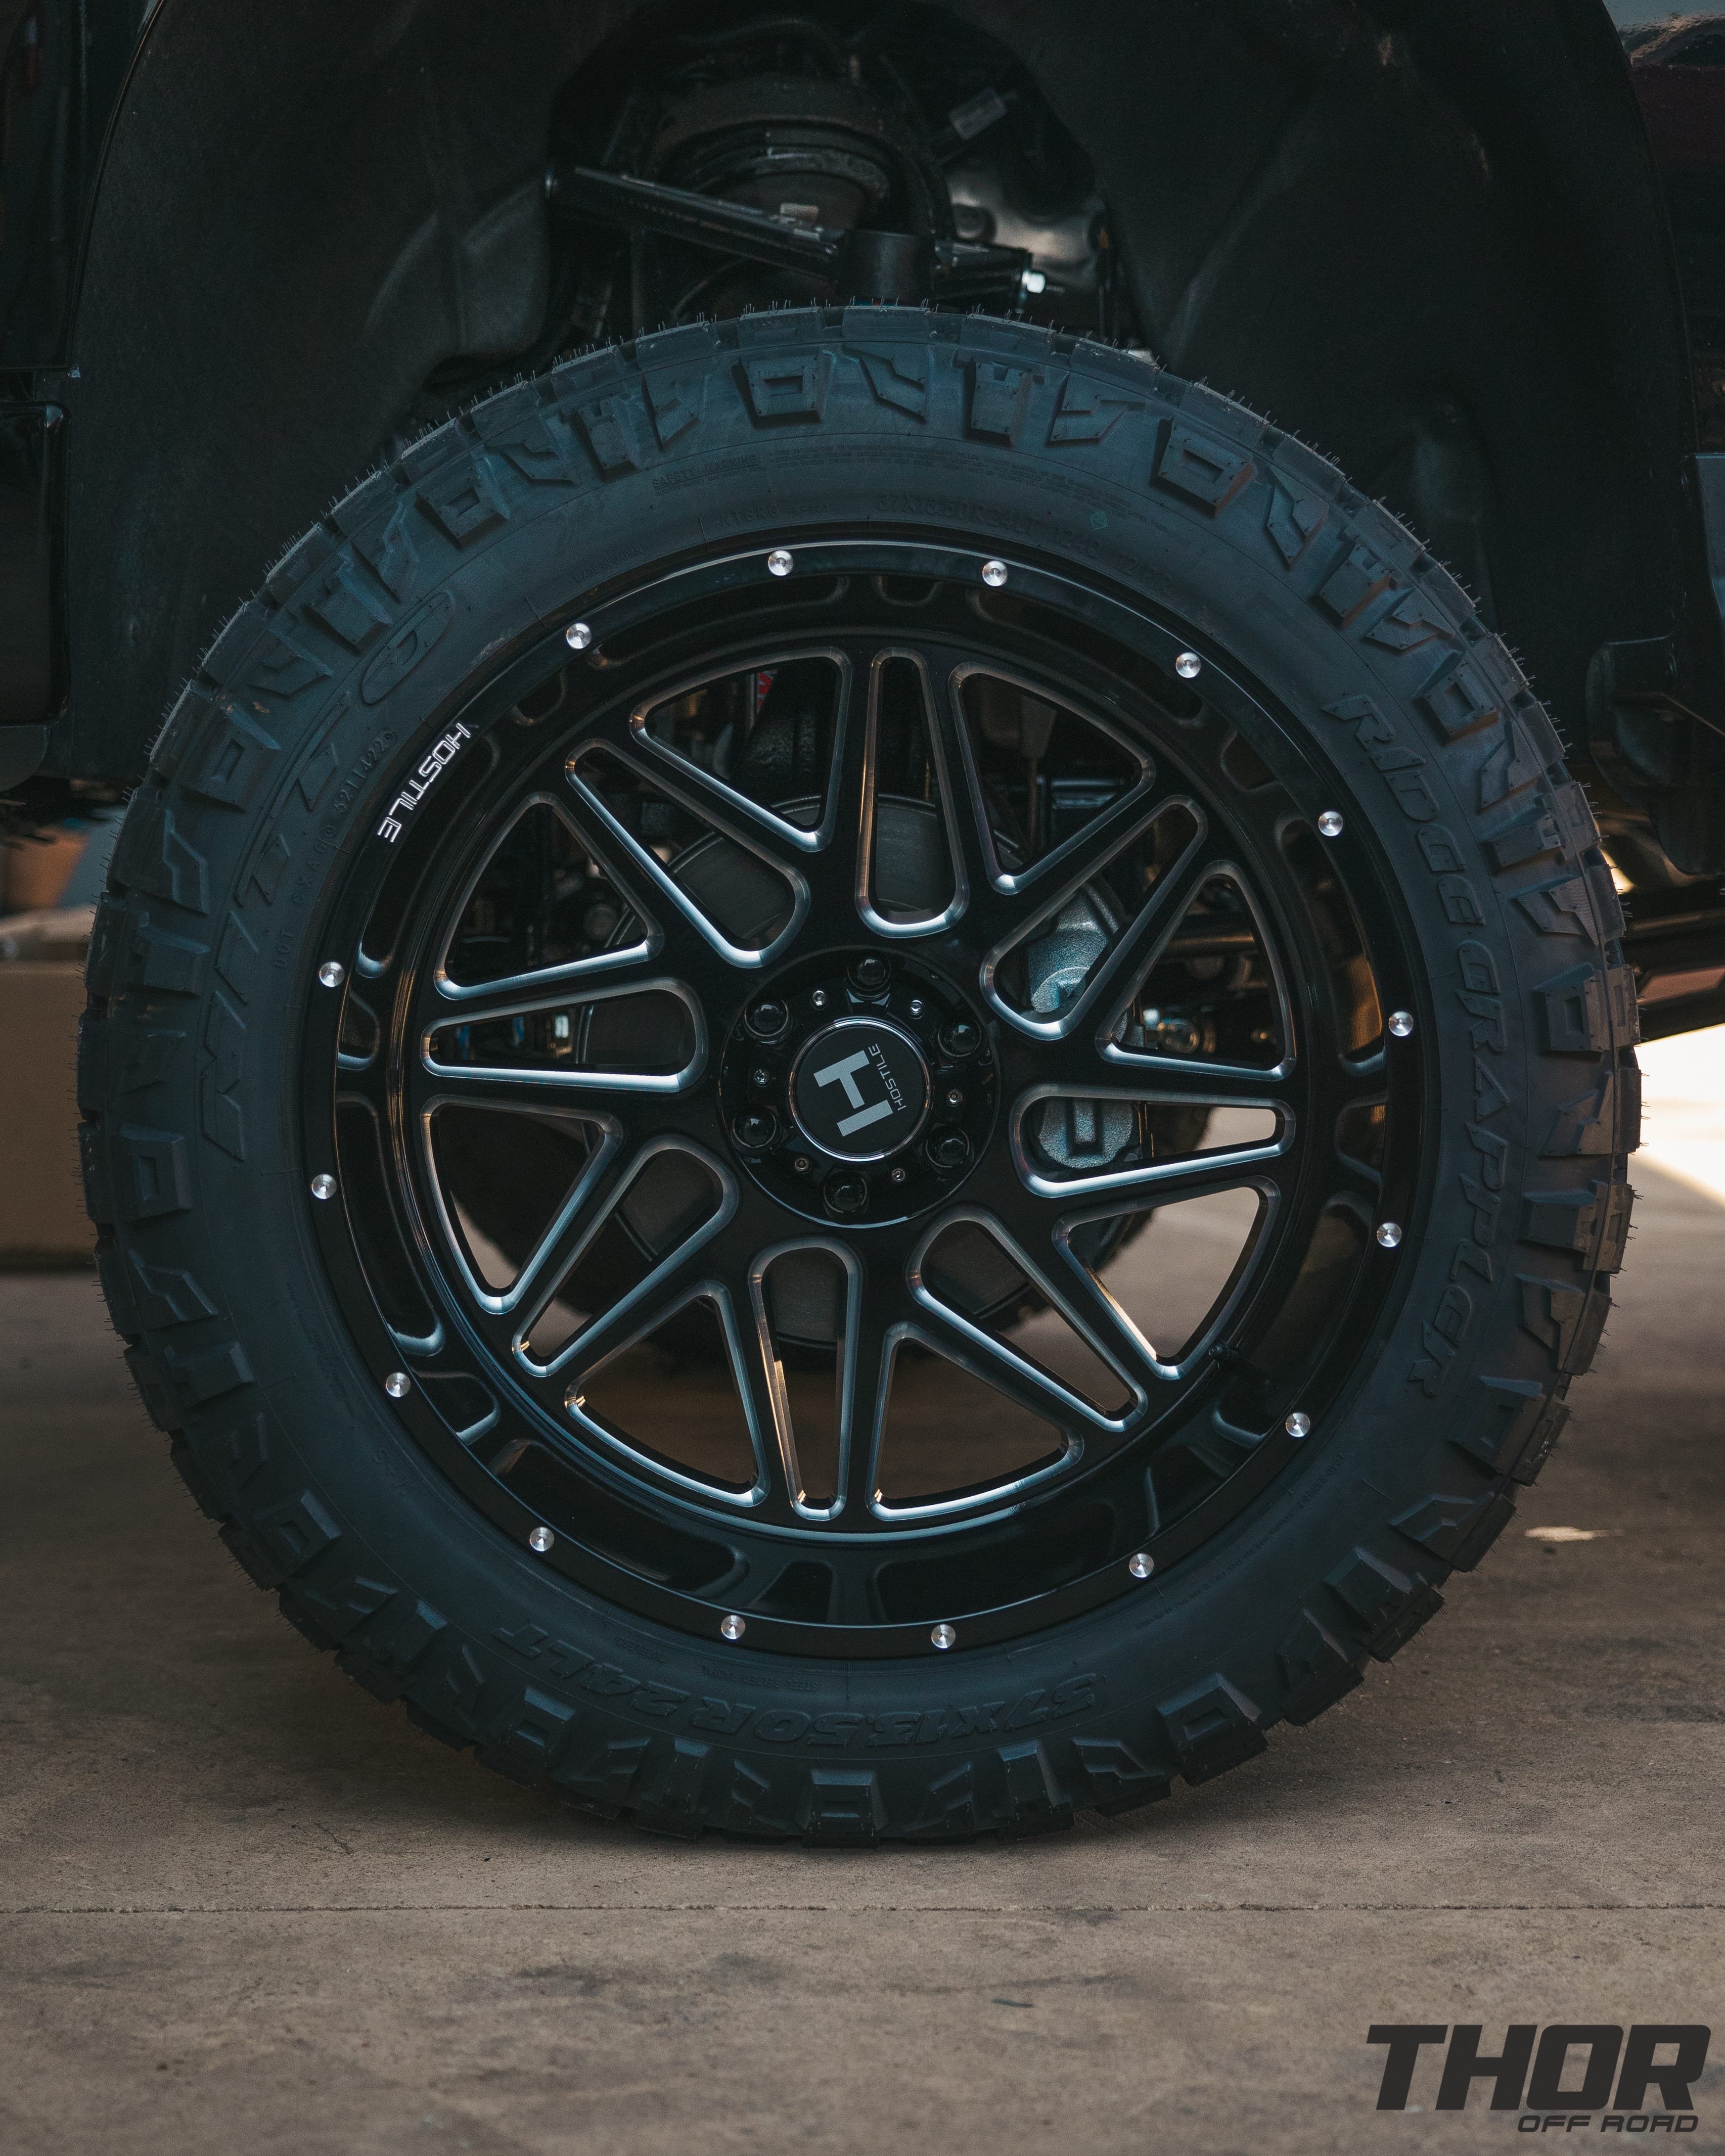 2022 Chevrolet Silverado 1500 LT Trail Boss in Black with McGaughy's 7"-9" Lift Kit, 6x5.5 Hostile H108 Sprocket Wheels, 37x13.50R24 Nitto Ridge Grappler Tires